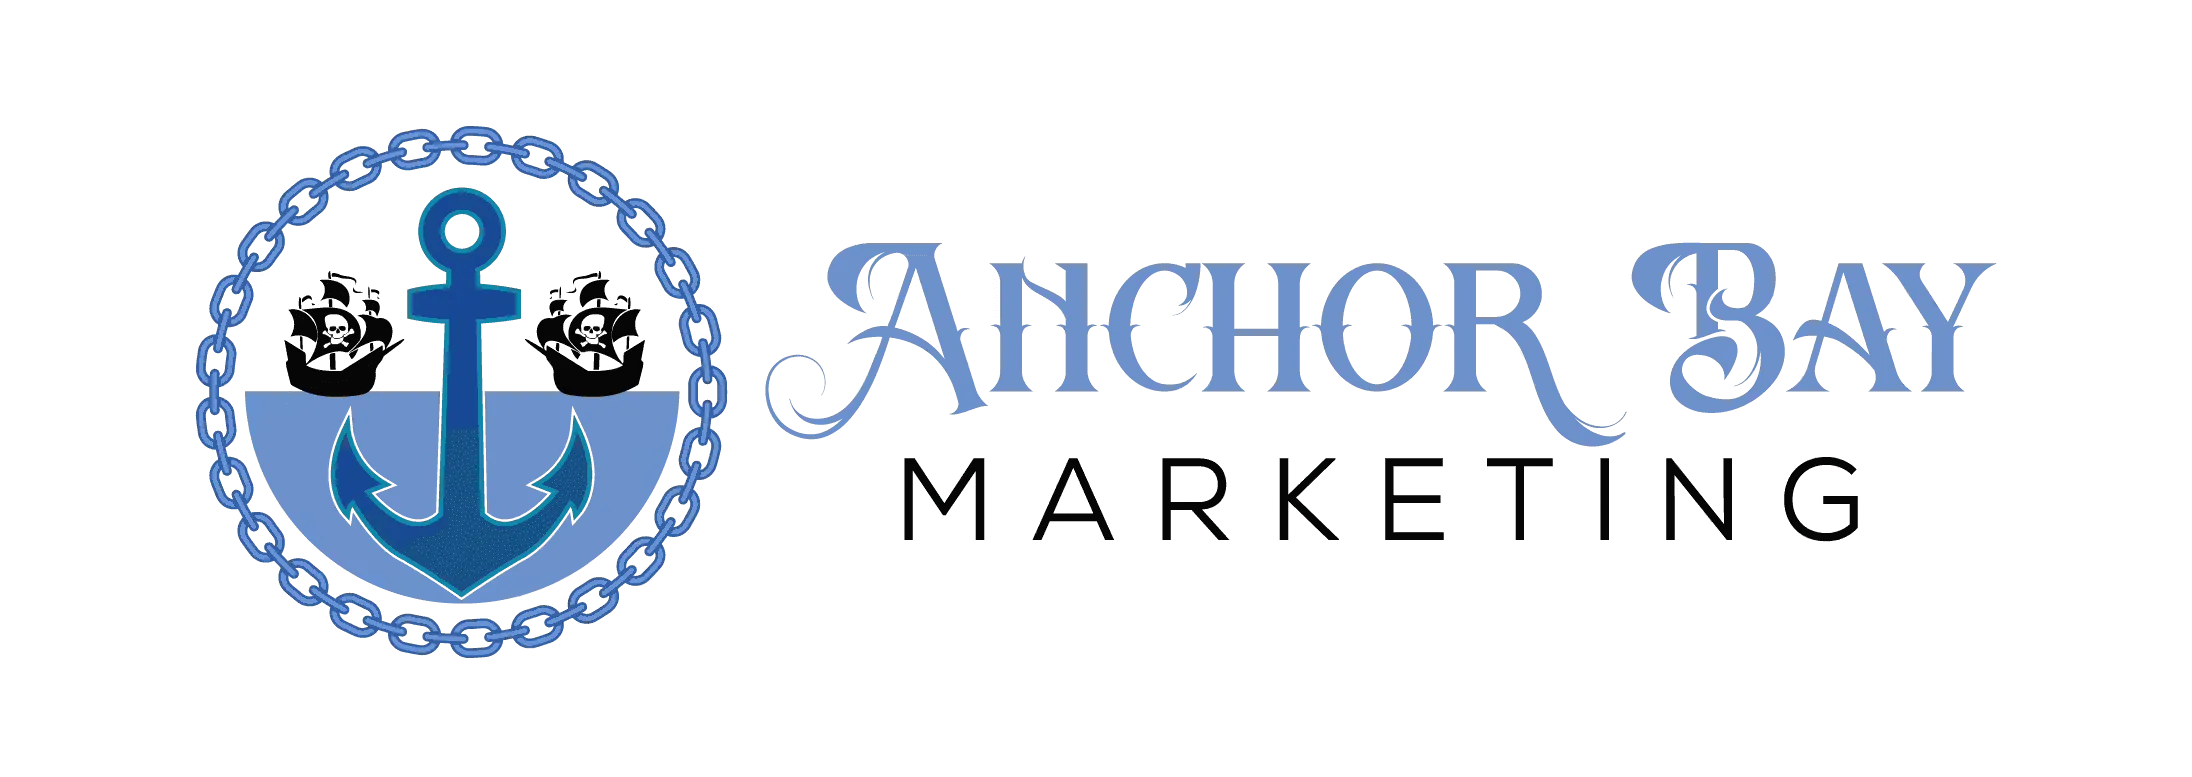 Digital Marketing - Anchor Bay Marketing